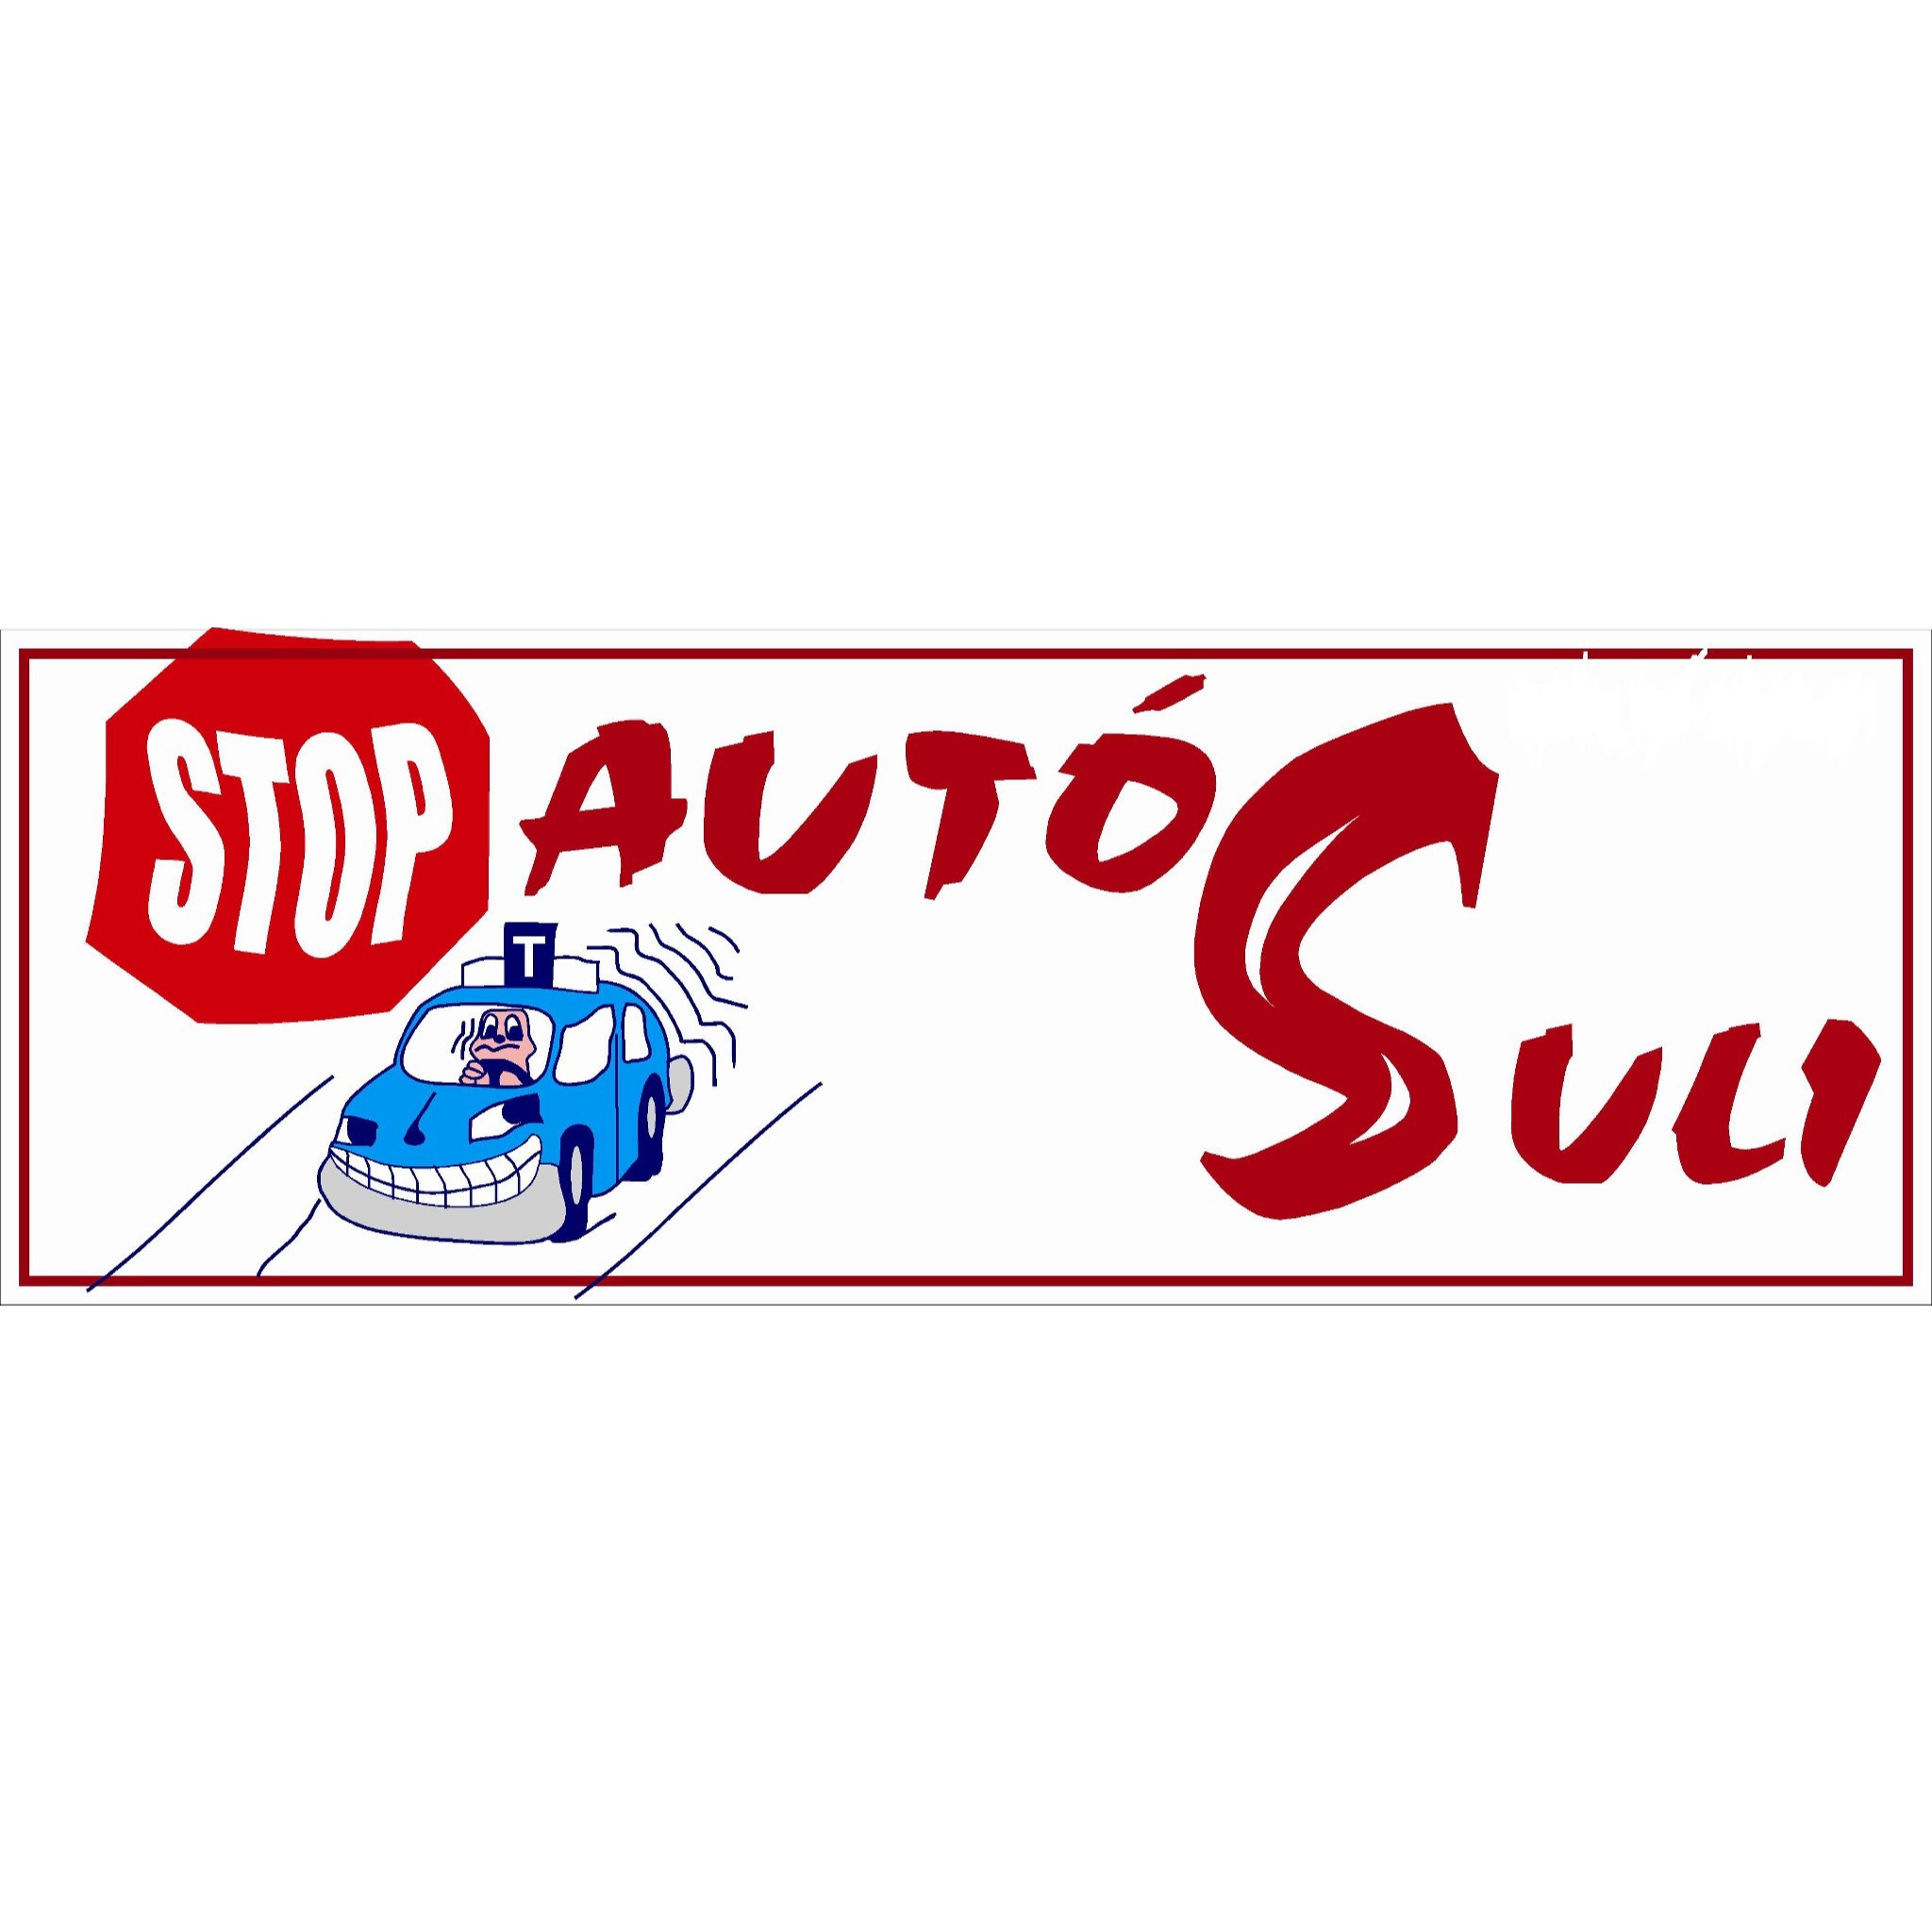 Szimel Gábor EV - Stop Autós Suli Logo